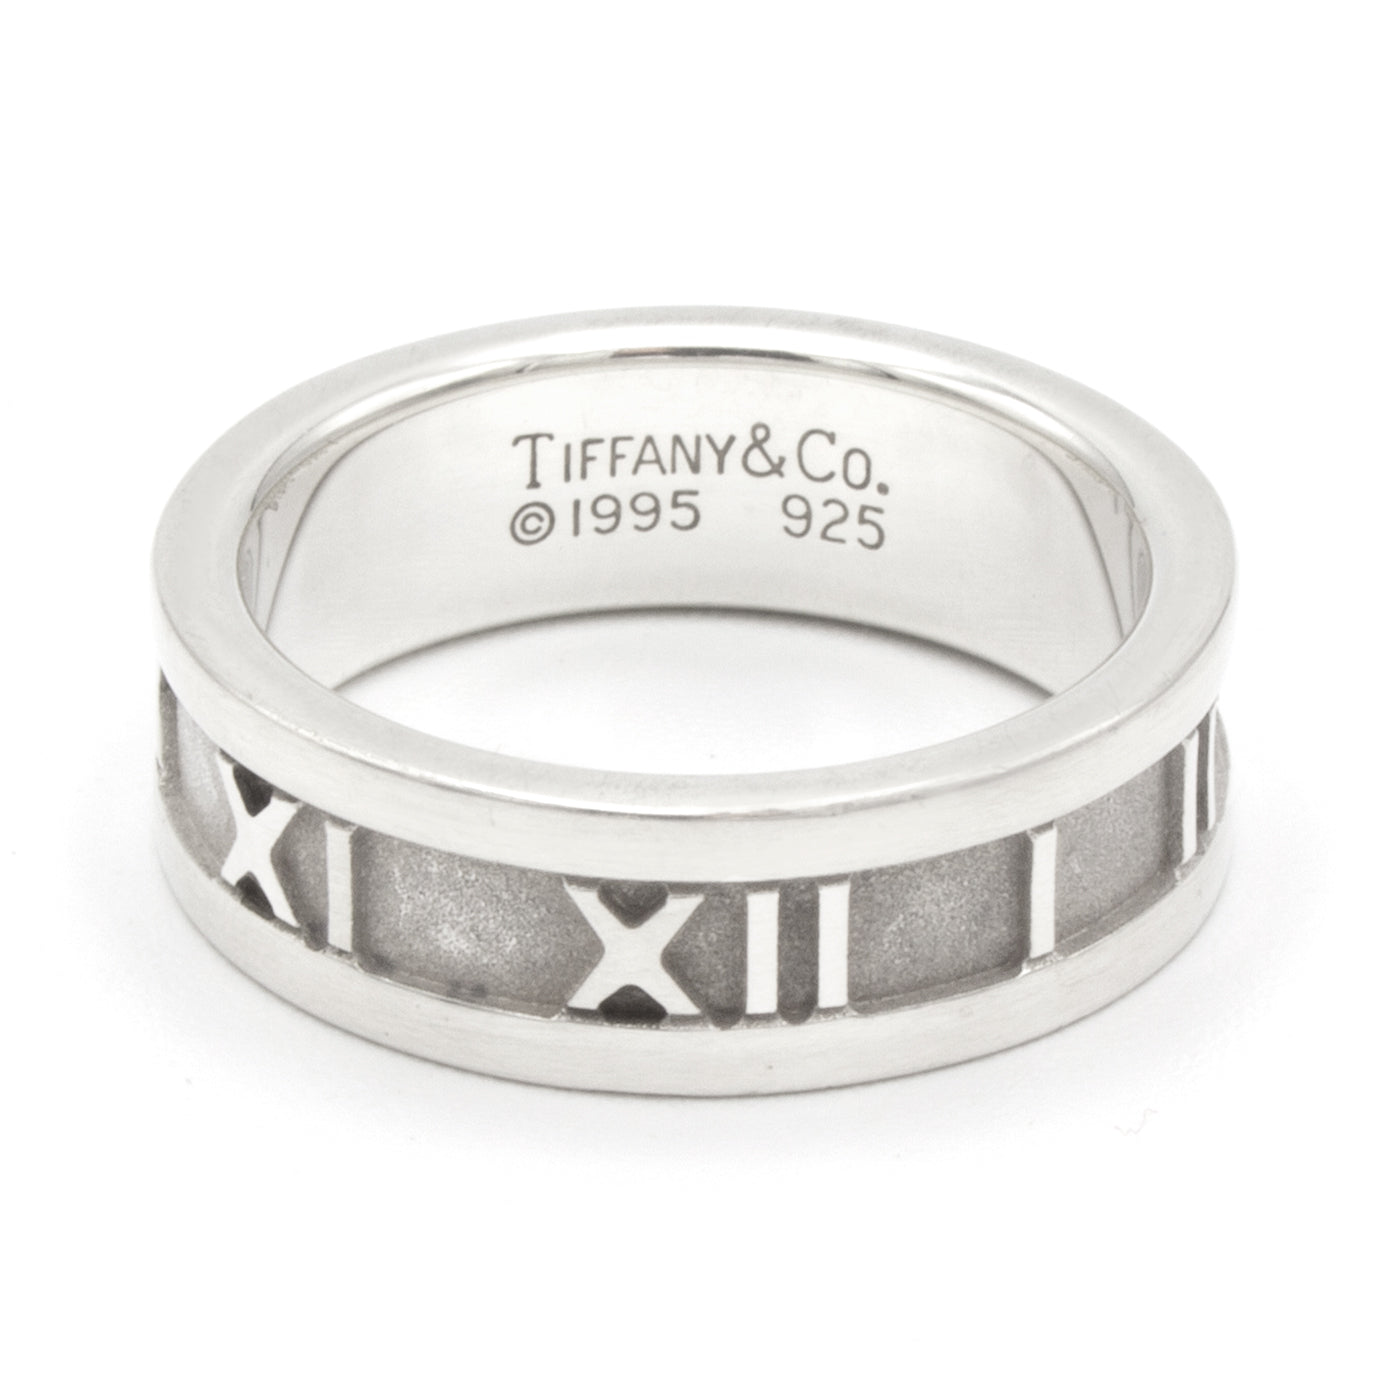 Tiffany & Co Atlas ring